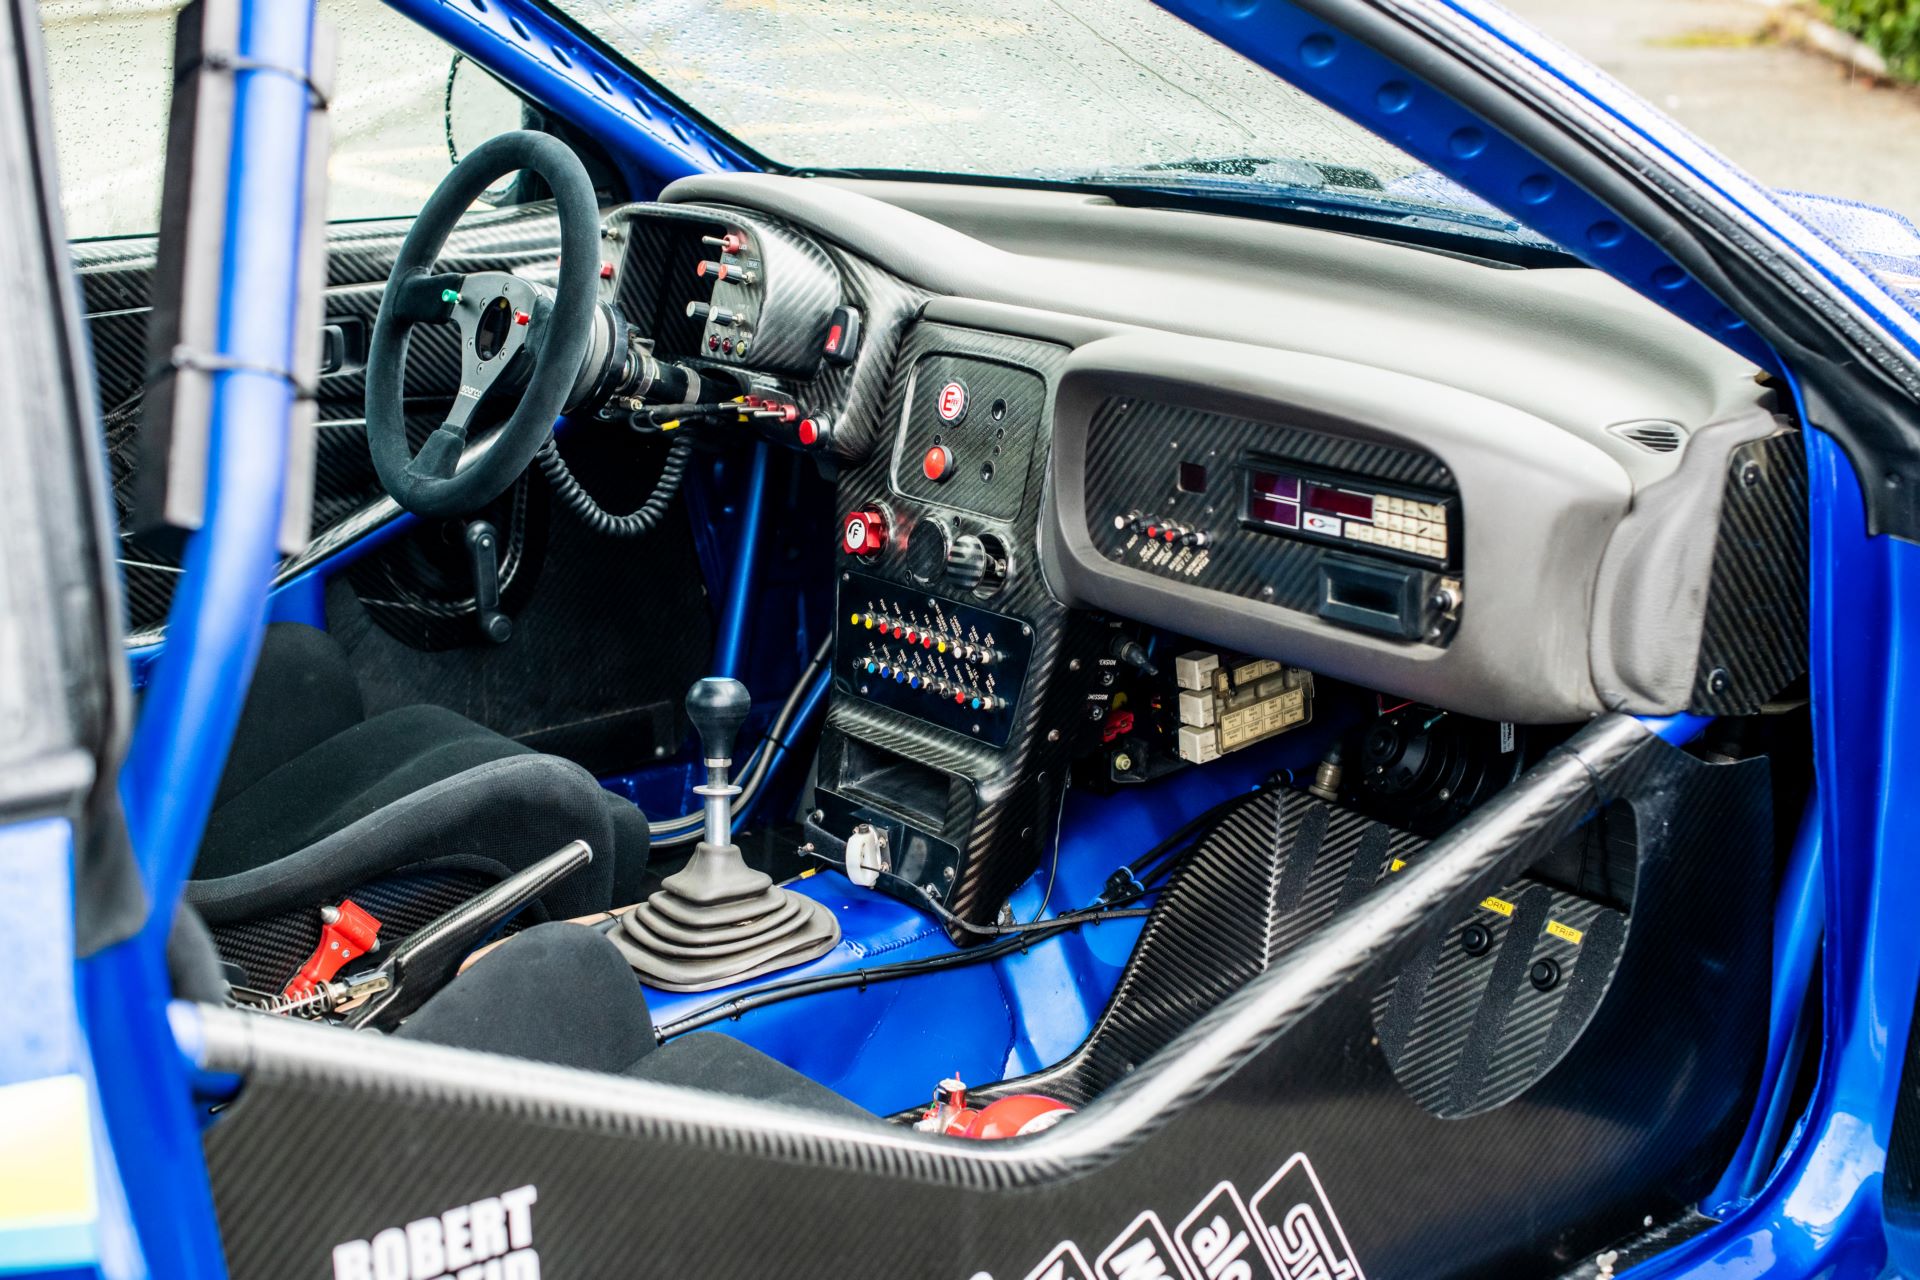 Subaru-Impreza-WRC-Richard-Burns-auction-128